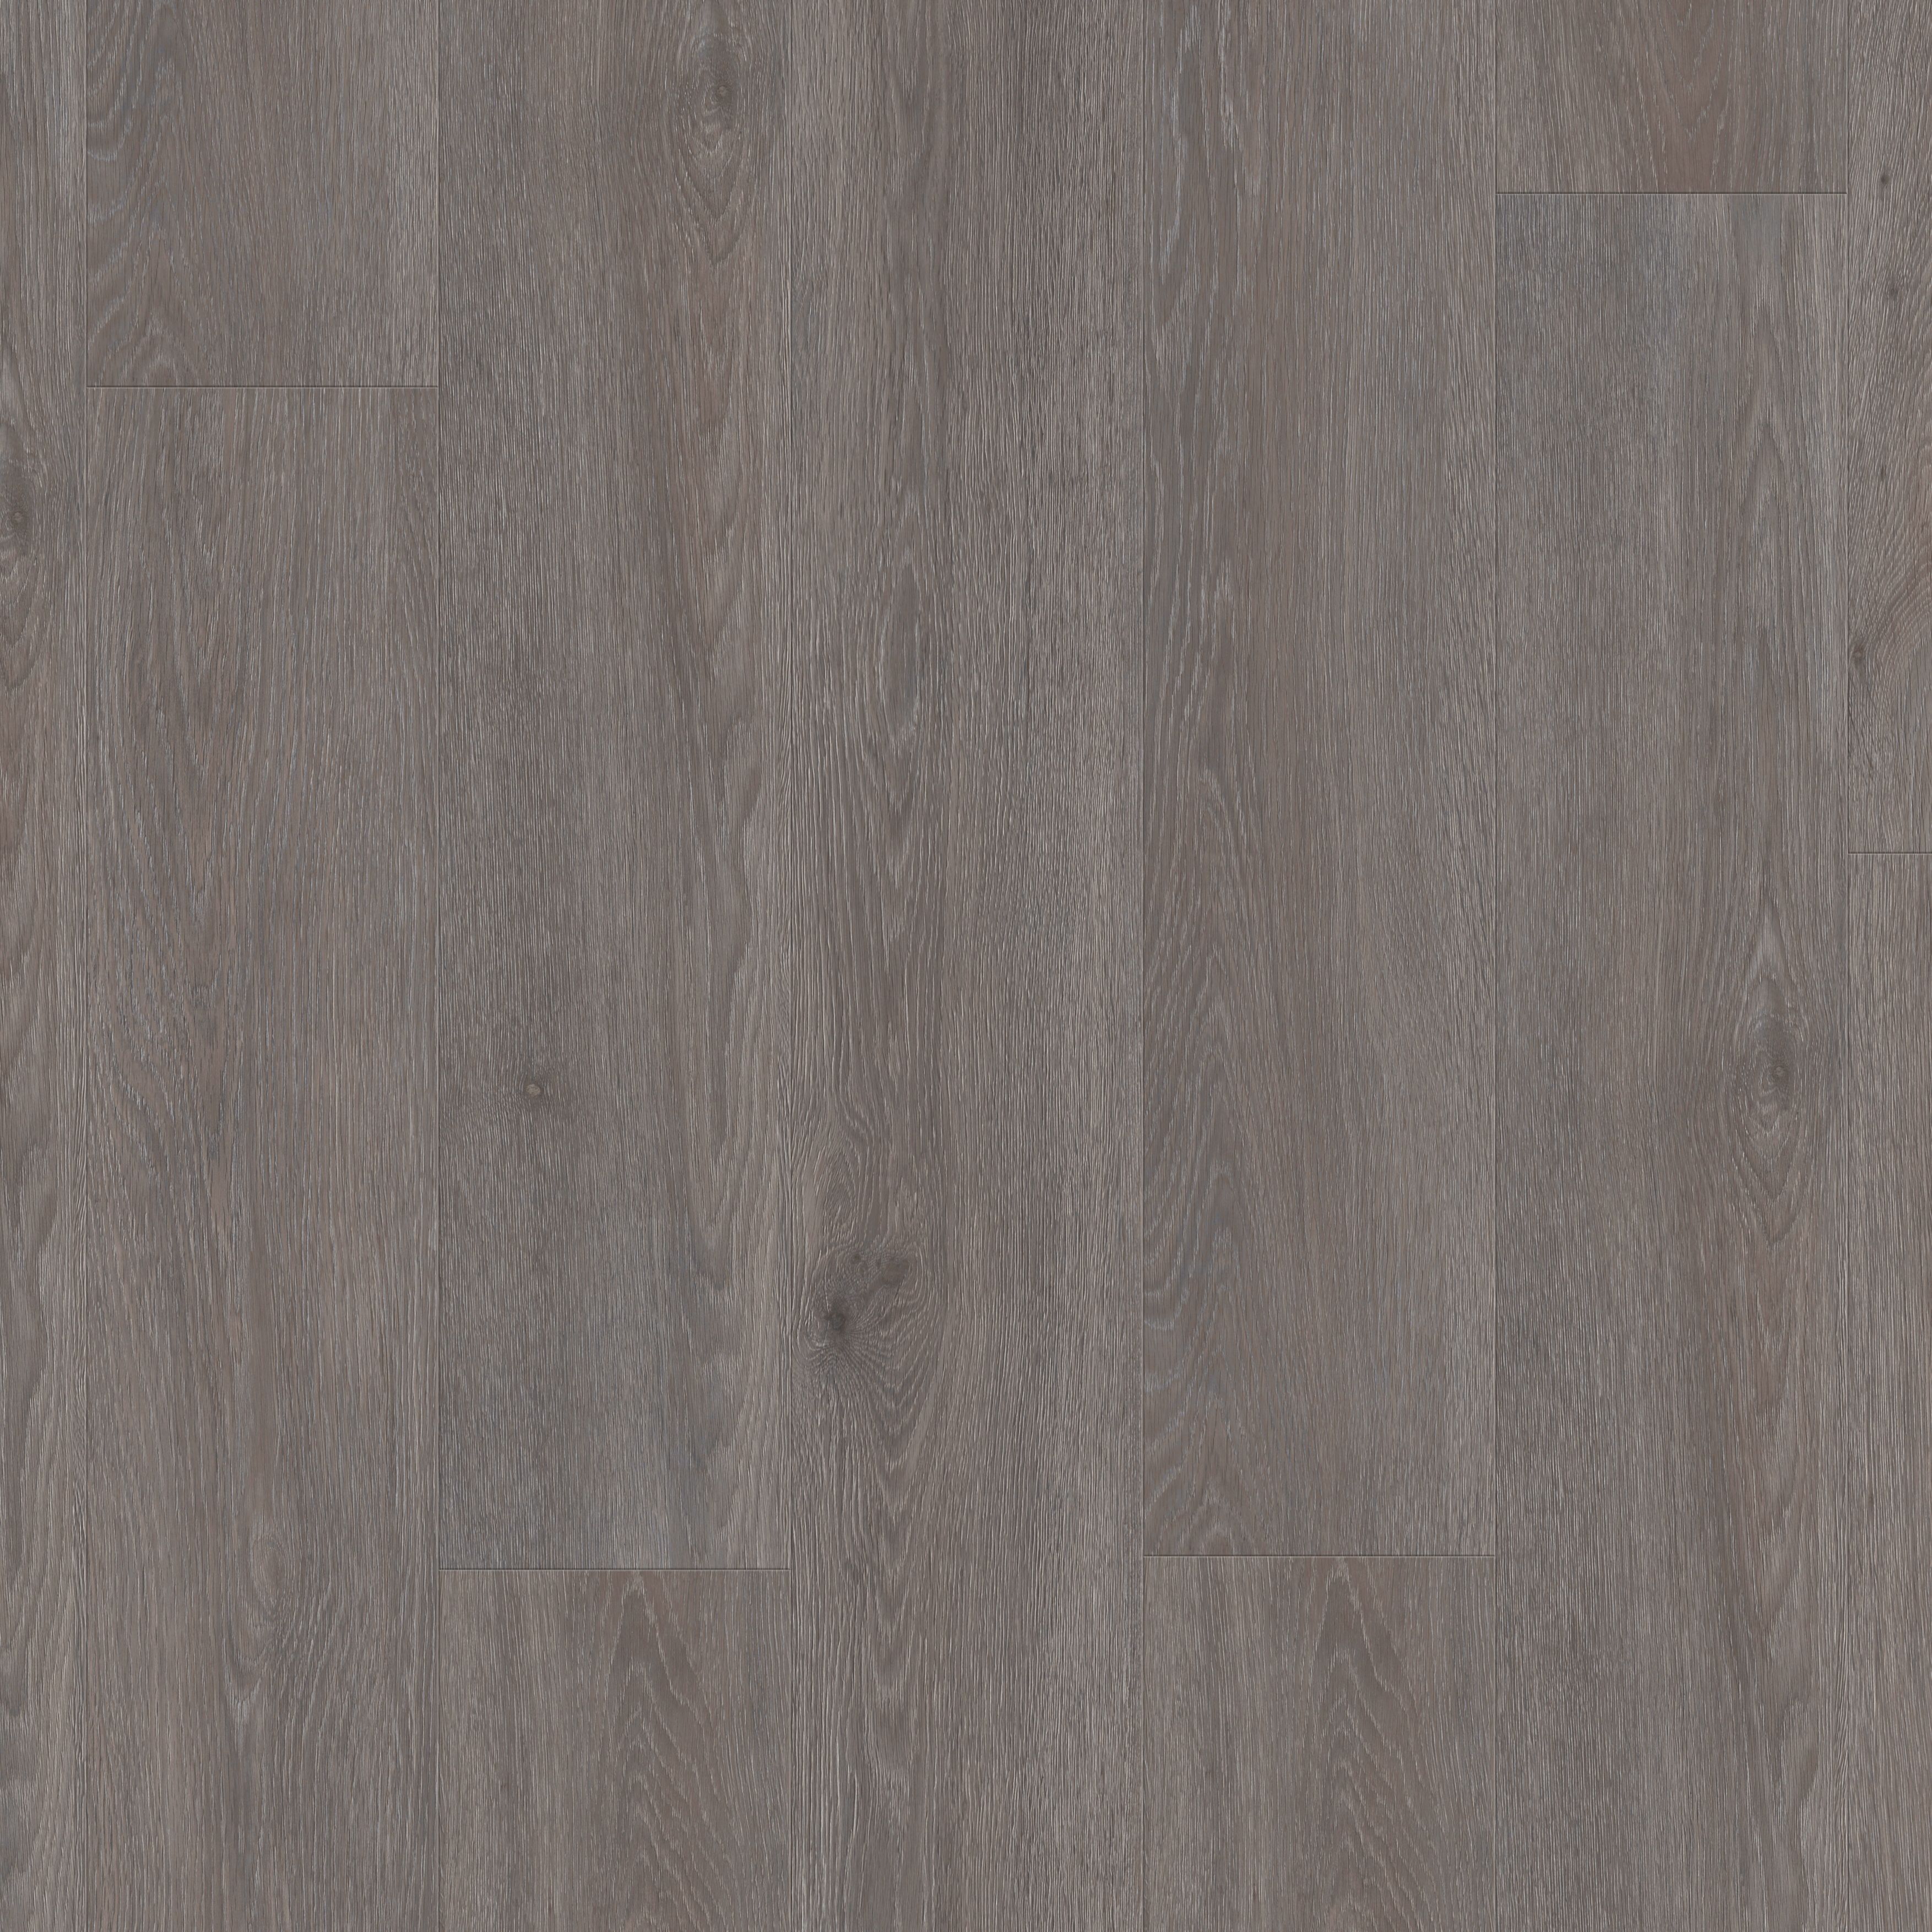 Quick-step Paso Smokey oak Plain Wood effect Luxury vinyl click flooring, 2.13m²